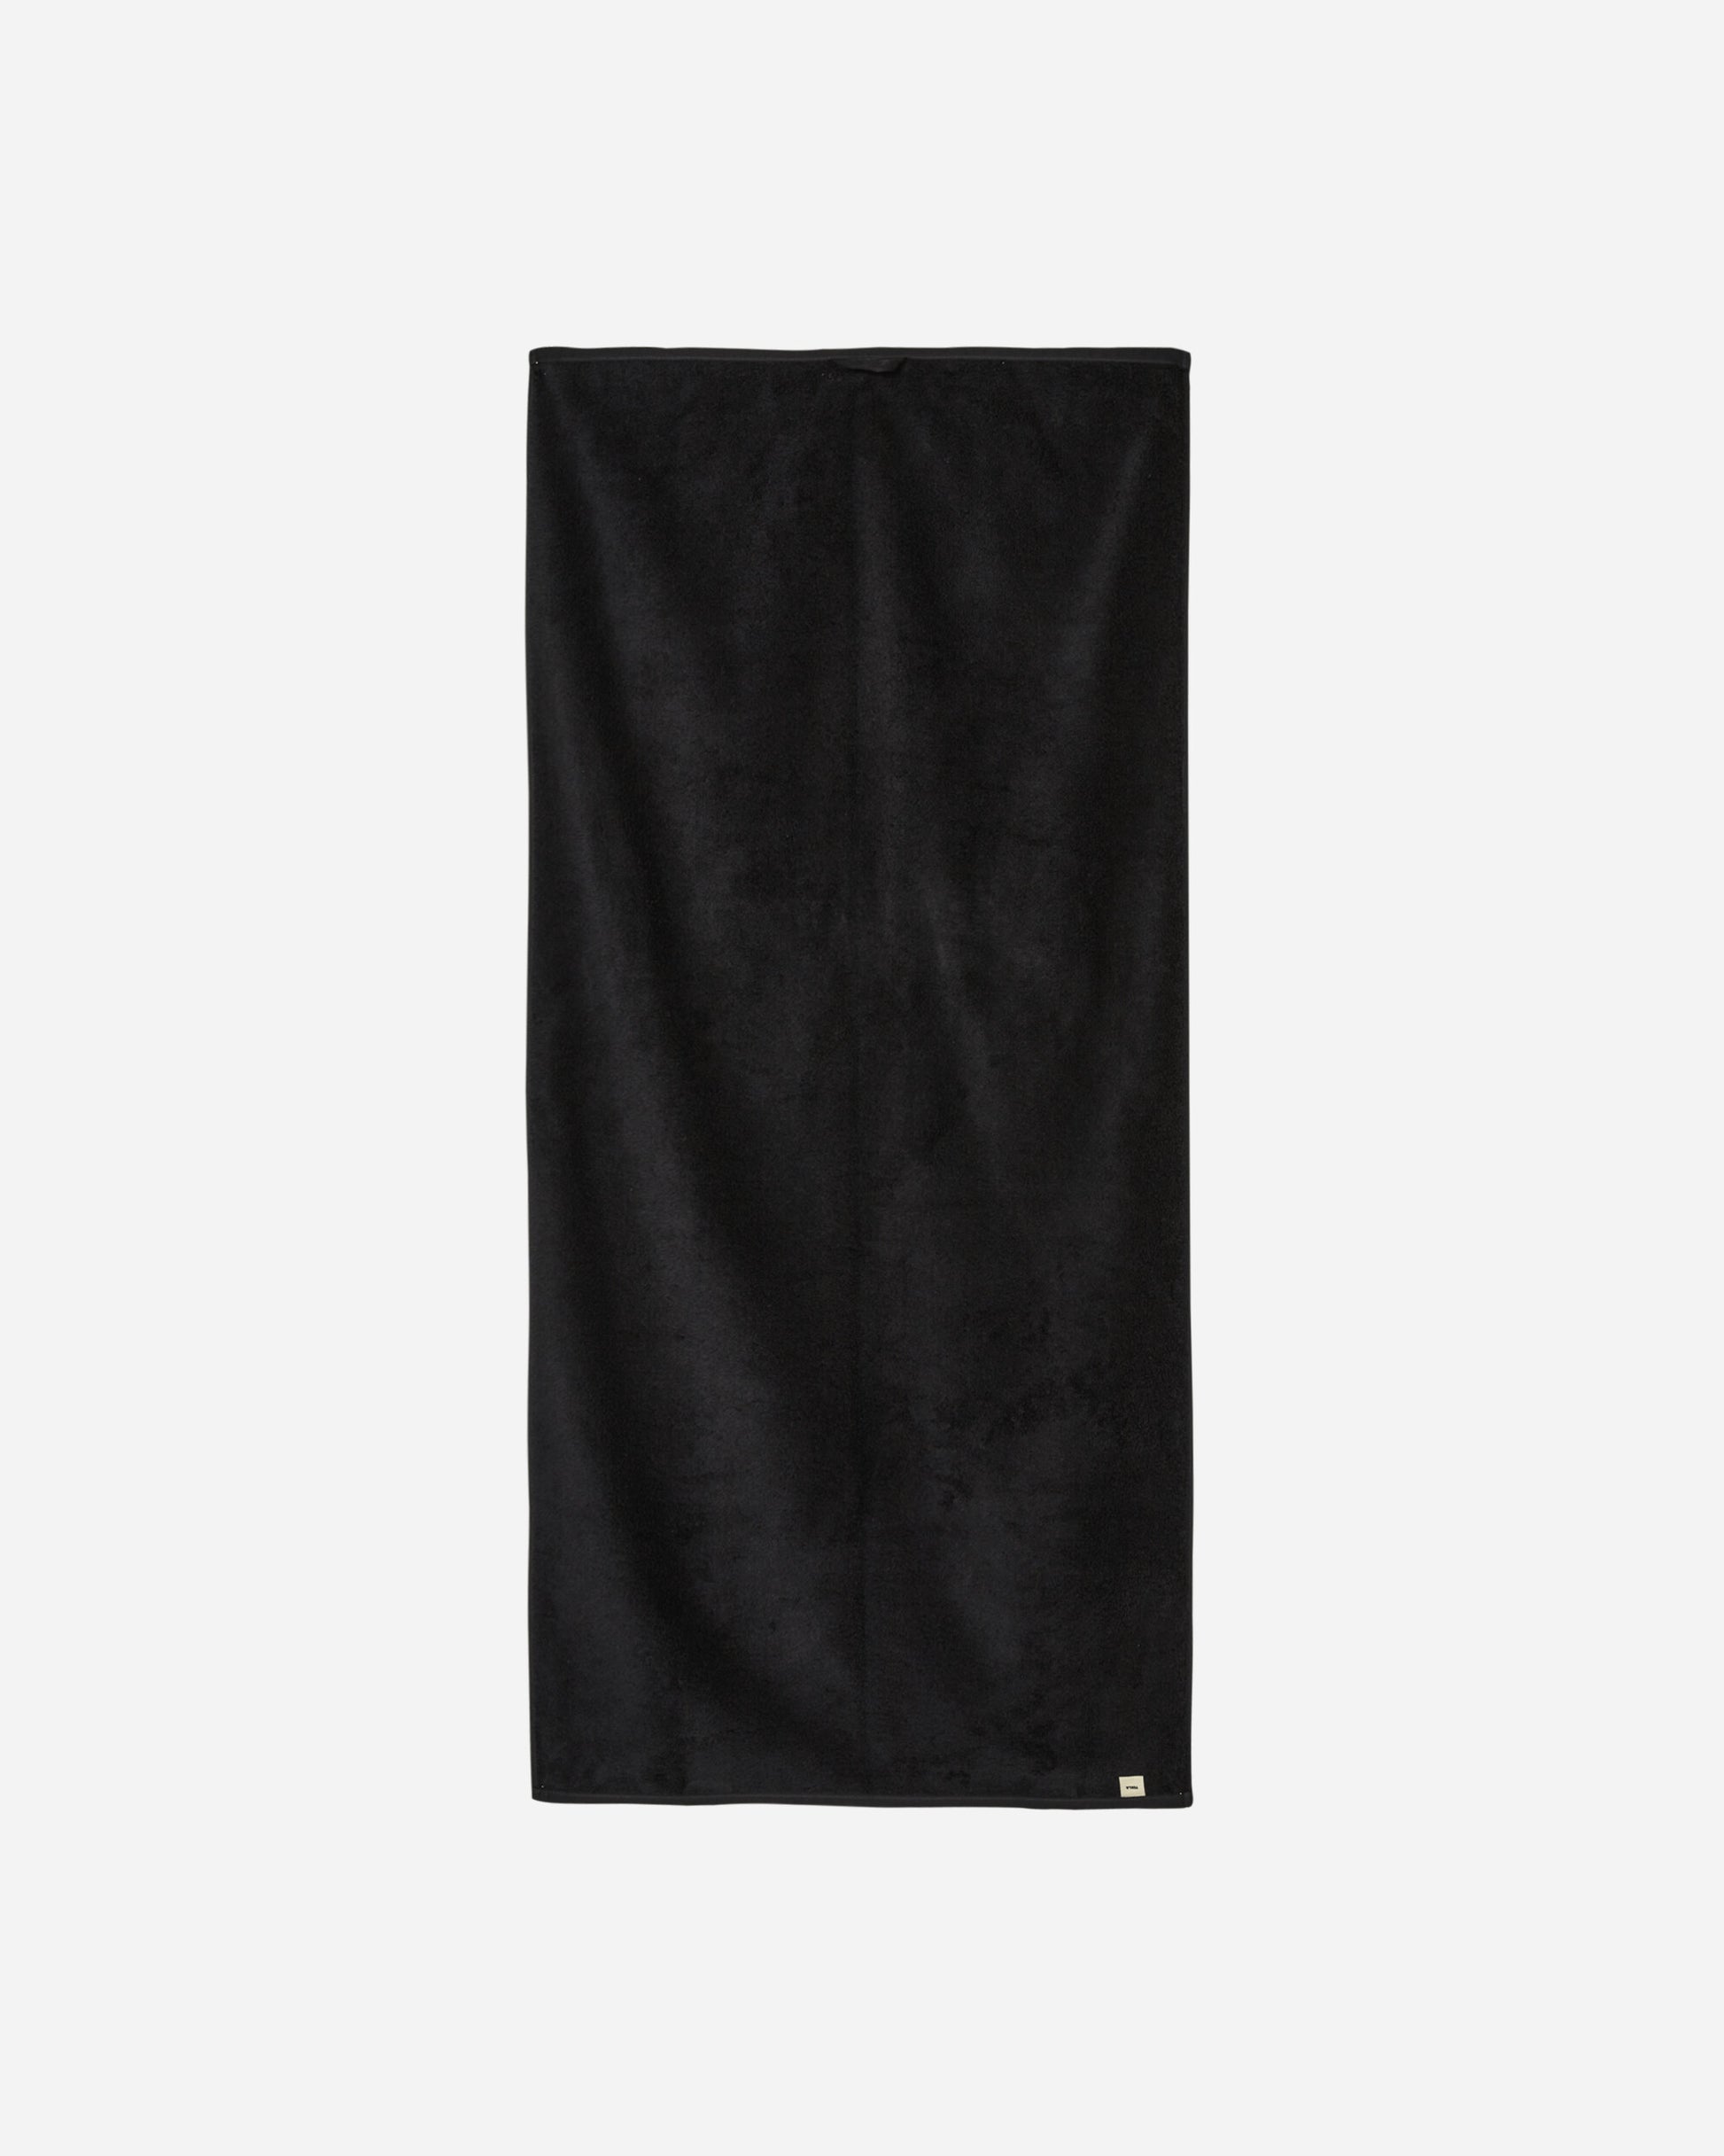 Tekla Bath Towel Black Textile Bath Towels TT-BL-70x140 BLST